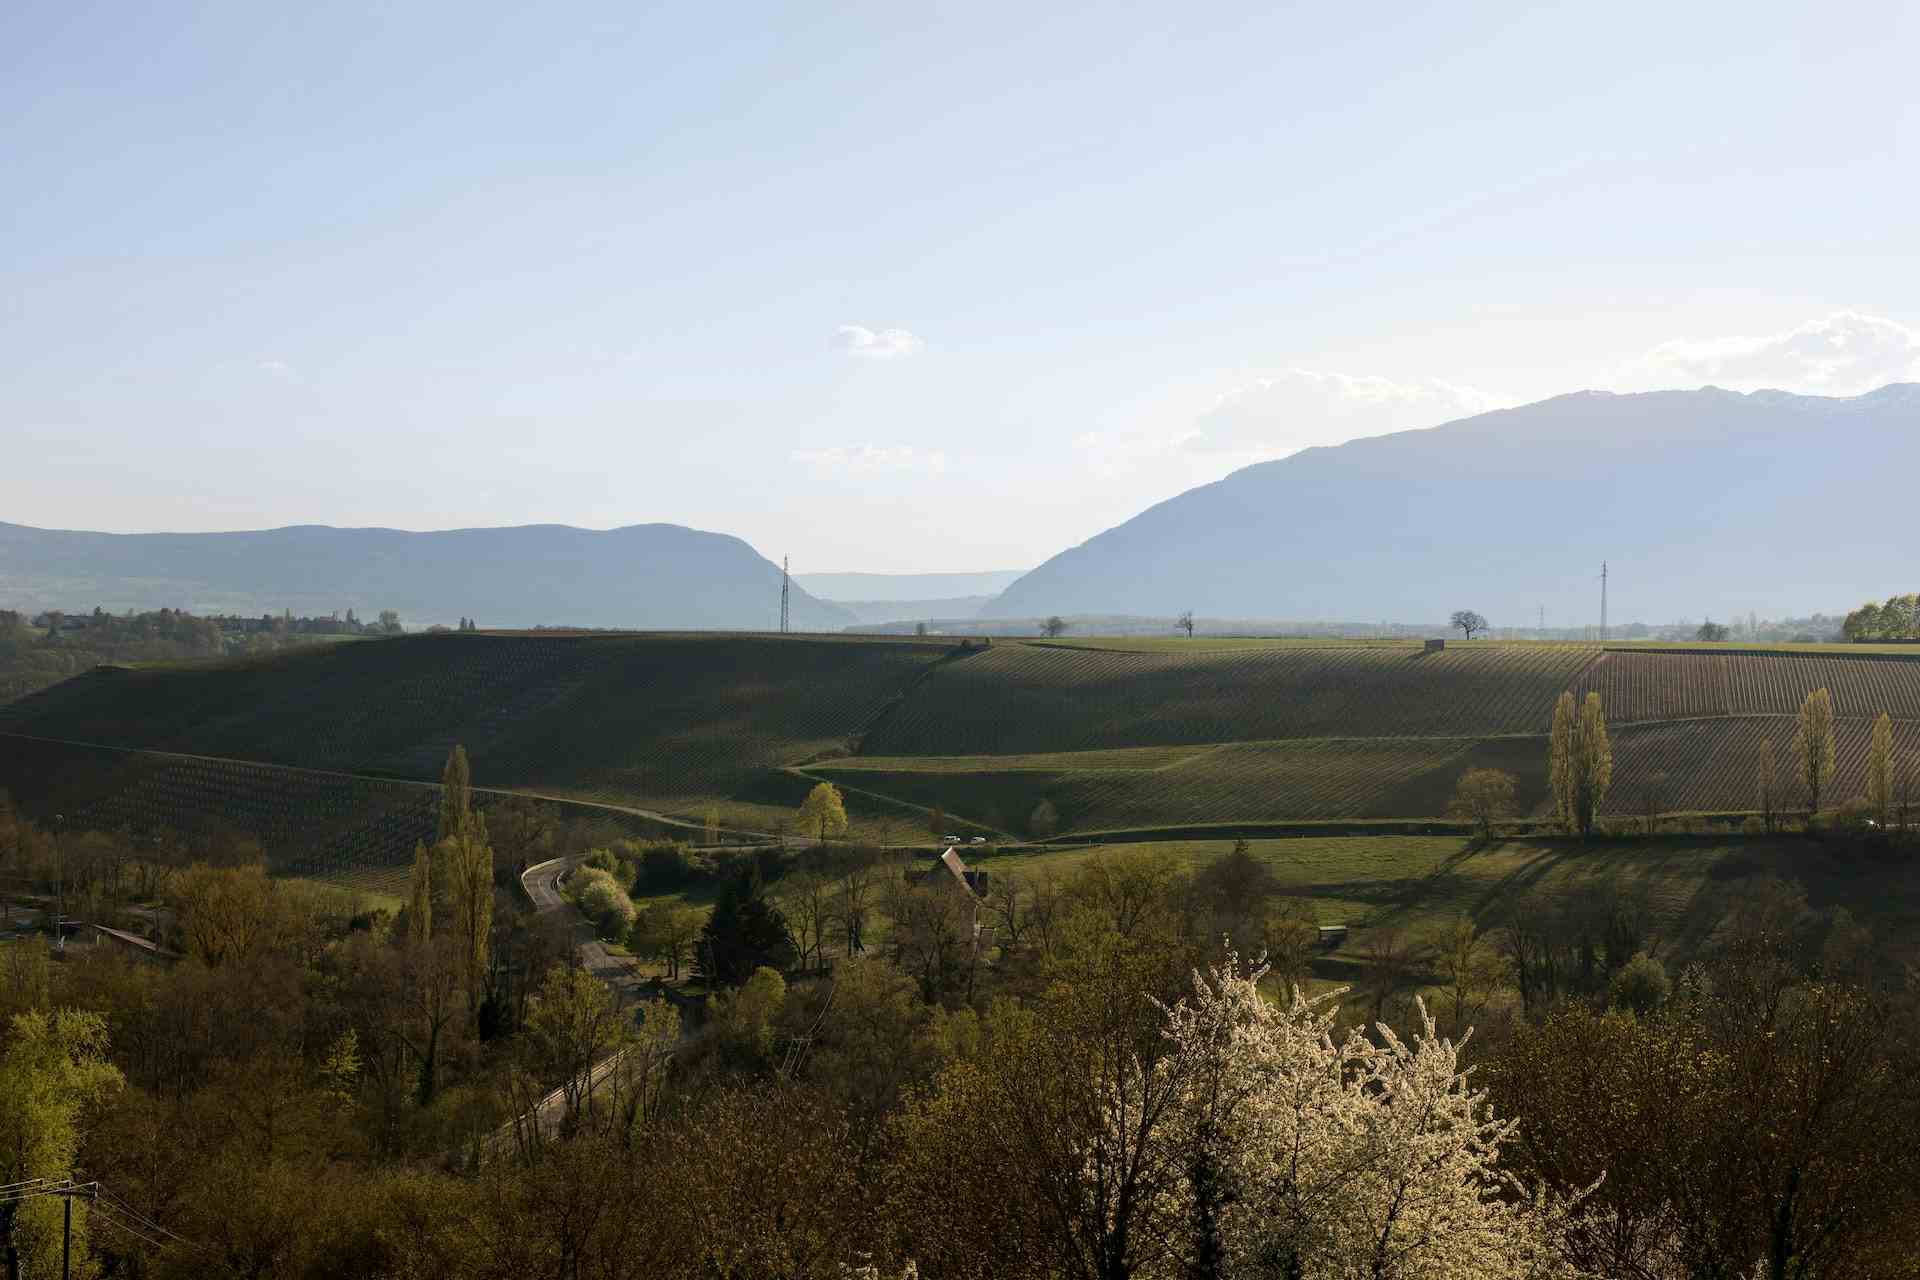 Domaine de Montfleury, producer in Meyrin canton of Geneva in Switzerland